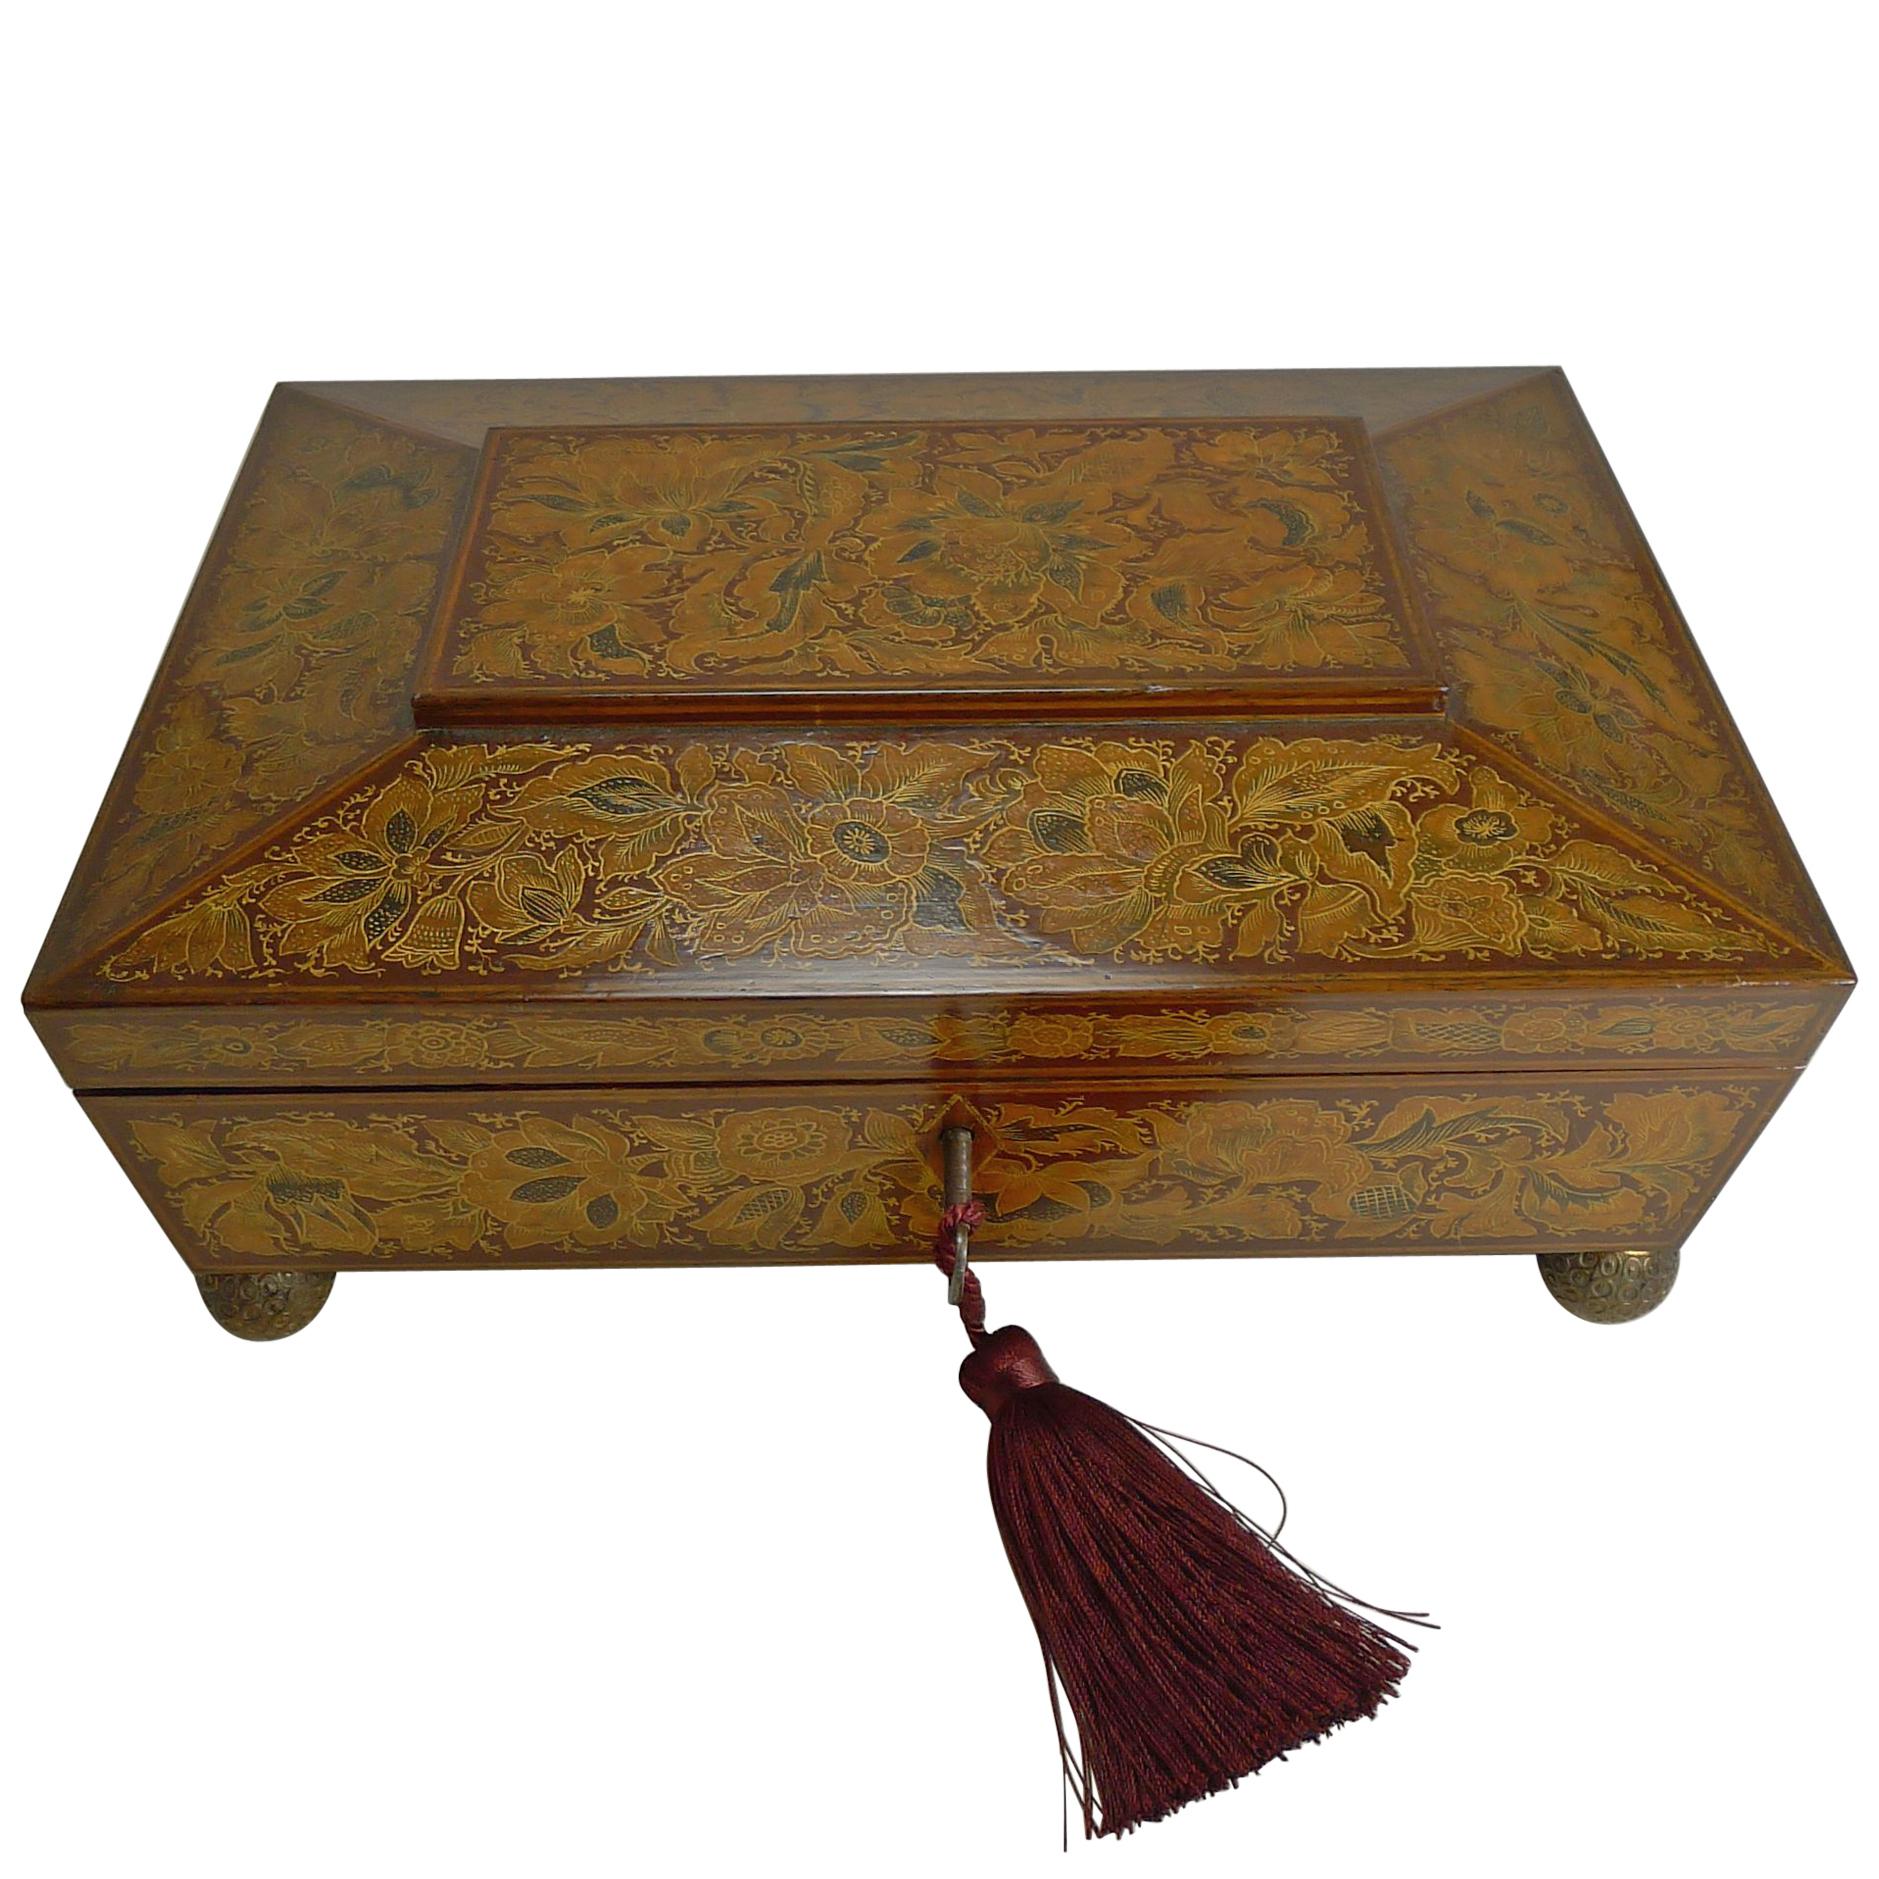 Antique English Regency Penwork Games or Playing Card Box, circa 1820